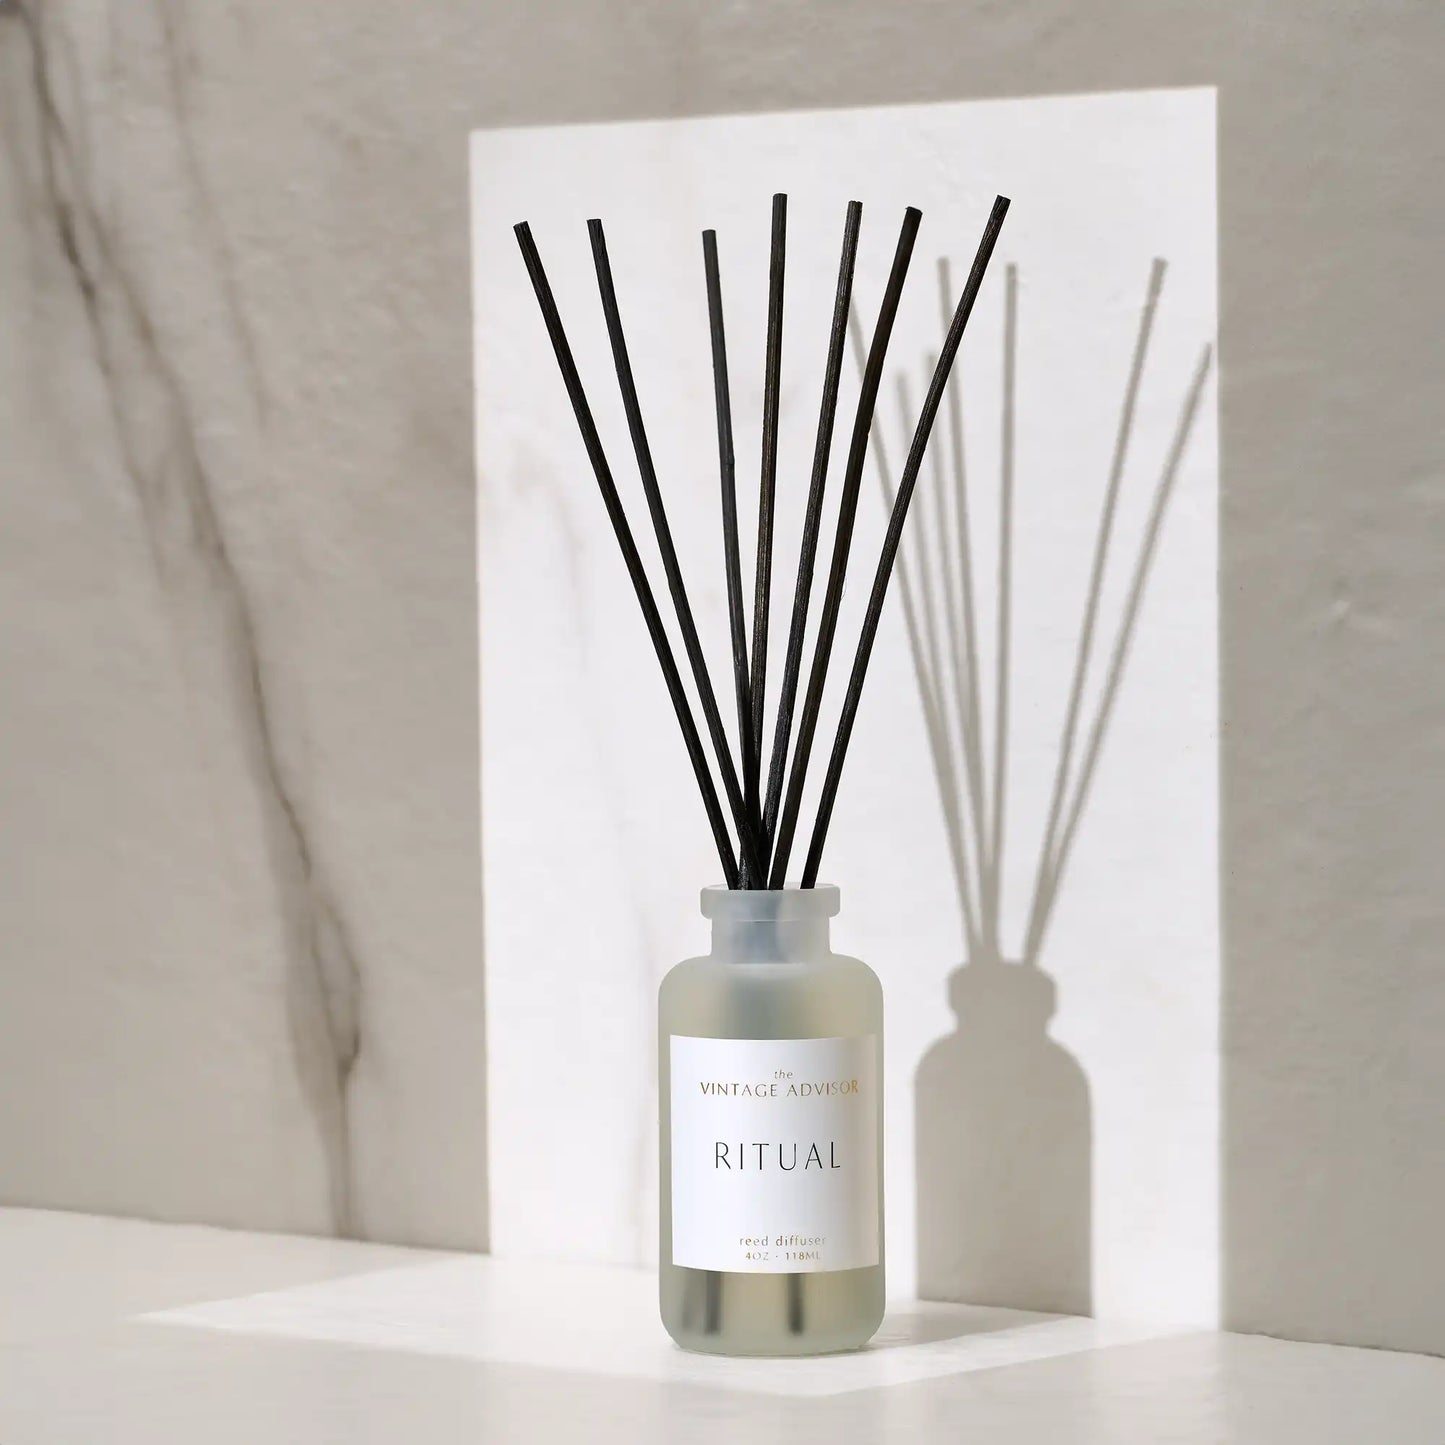 ritual reed diffuser  non-toxic home fragrance 